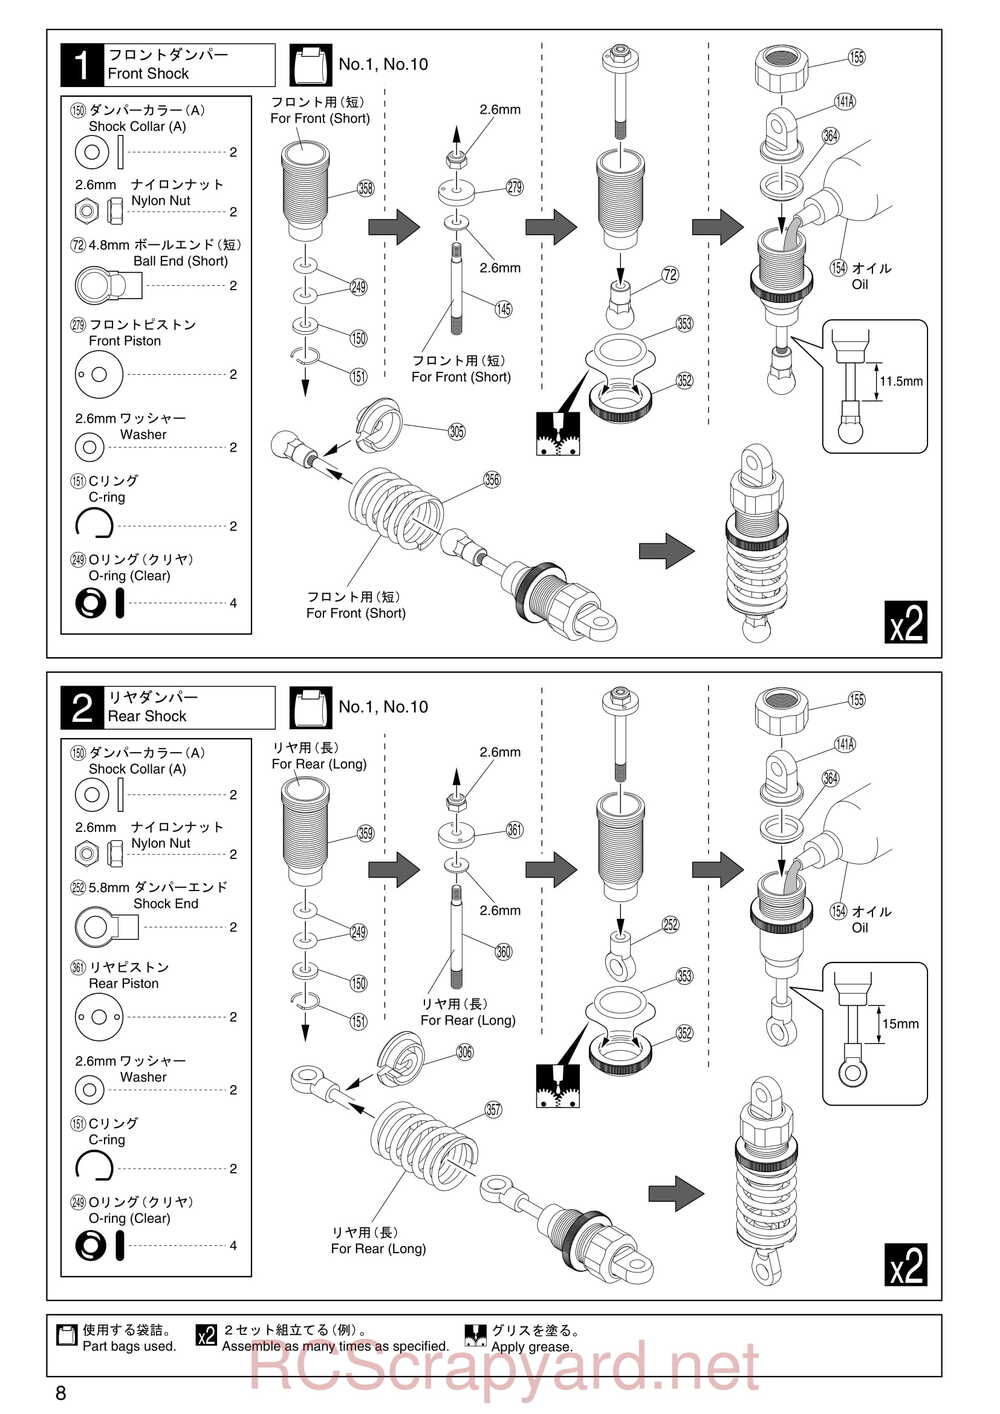 Kyosho - 31283 - Evolva-2003 - Manual - Page 08